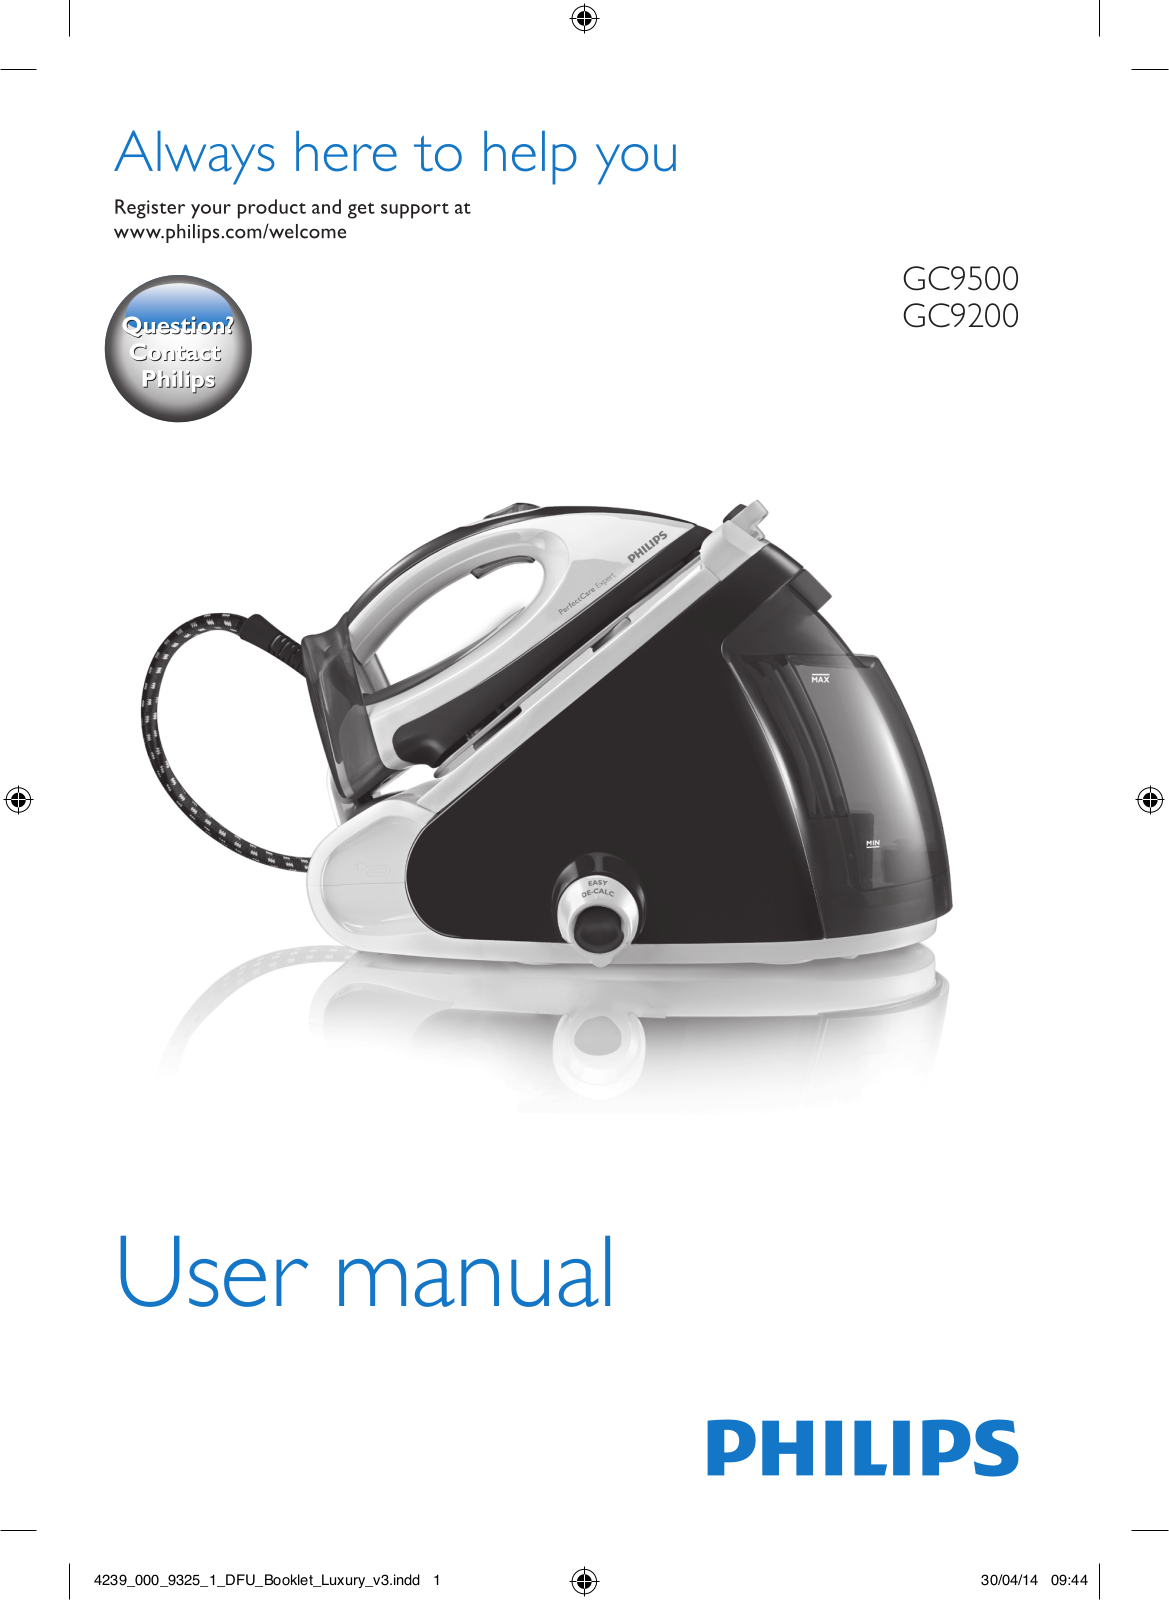 Philips GC9540 User Manual